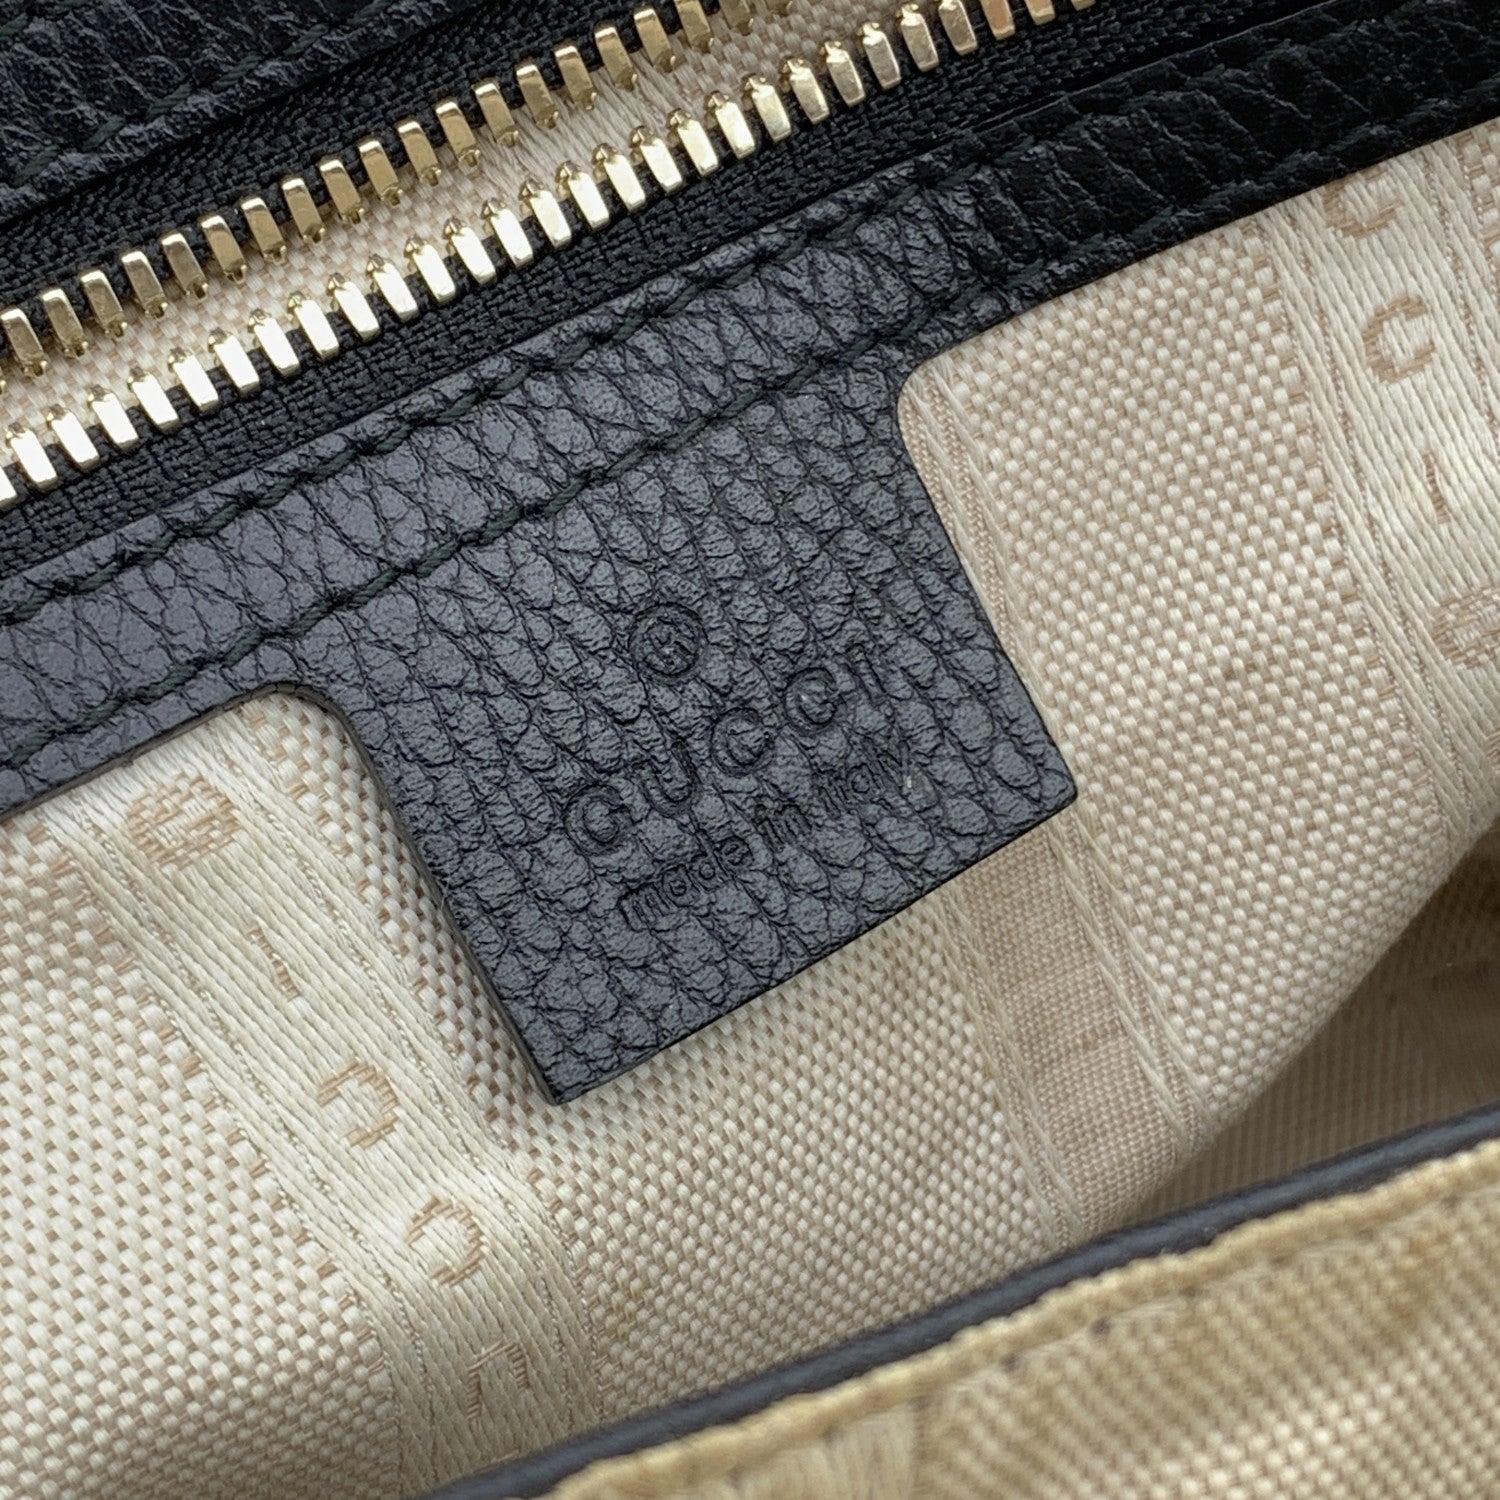 Gucci Black Leather Lady Dollar Dome Satchel Bag Handbag 4